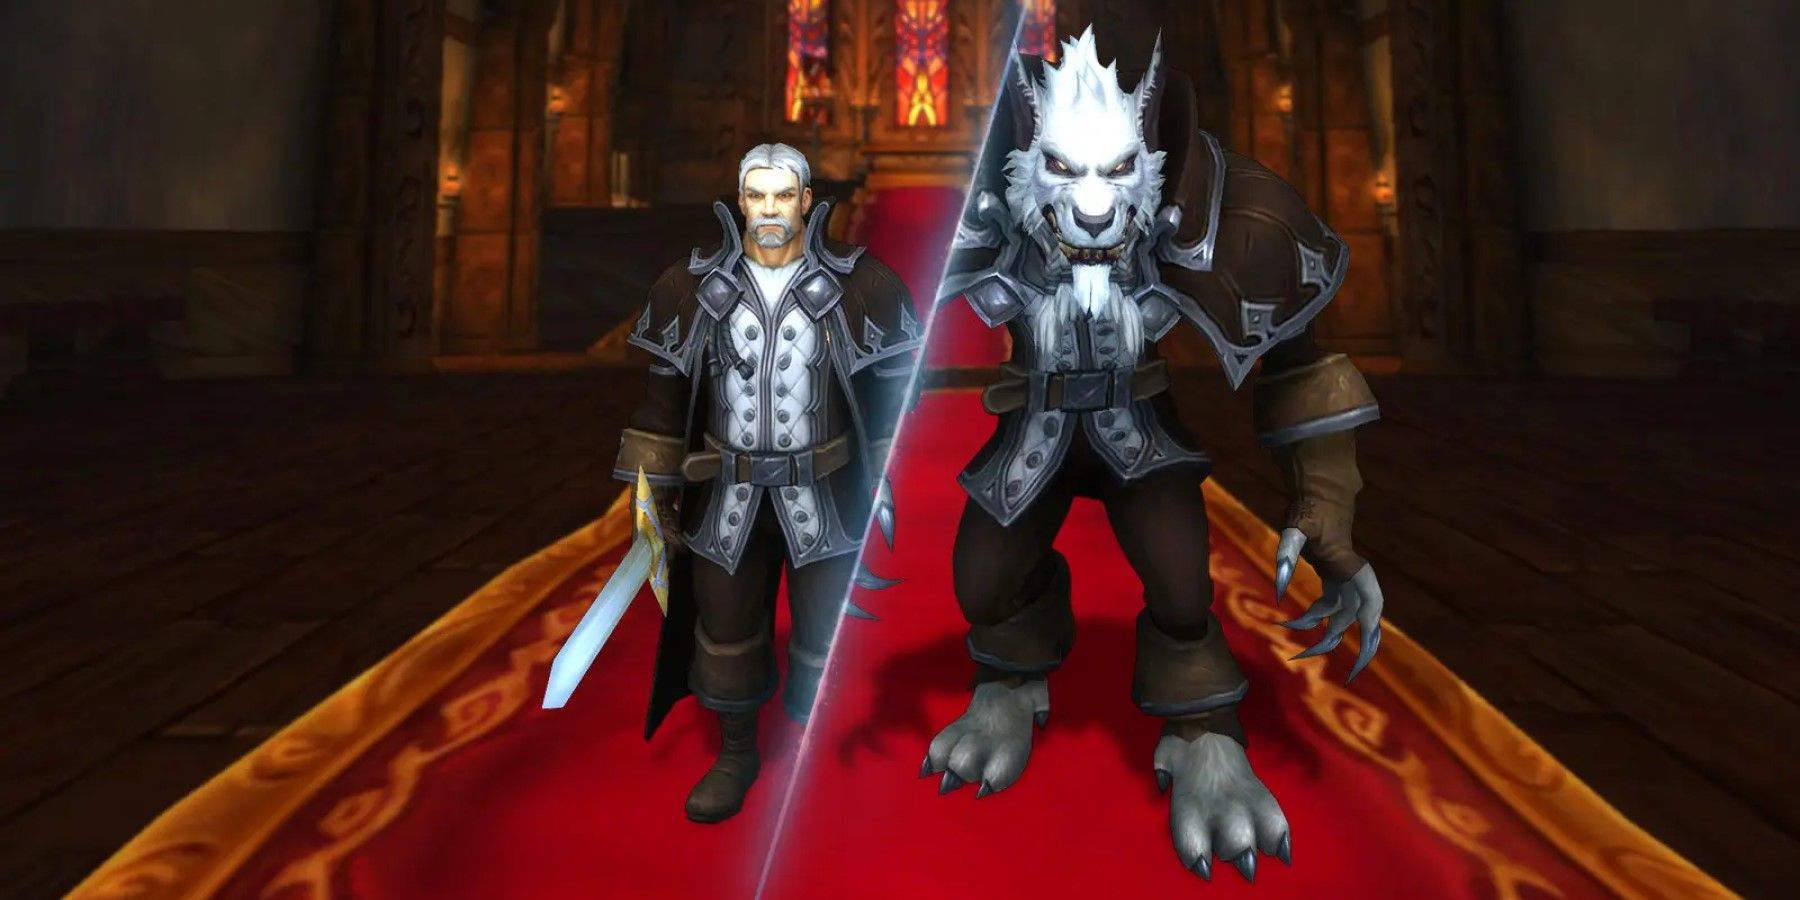 Glineas, Brasil World of Warcraft Wiki